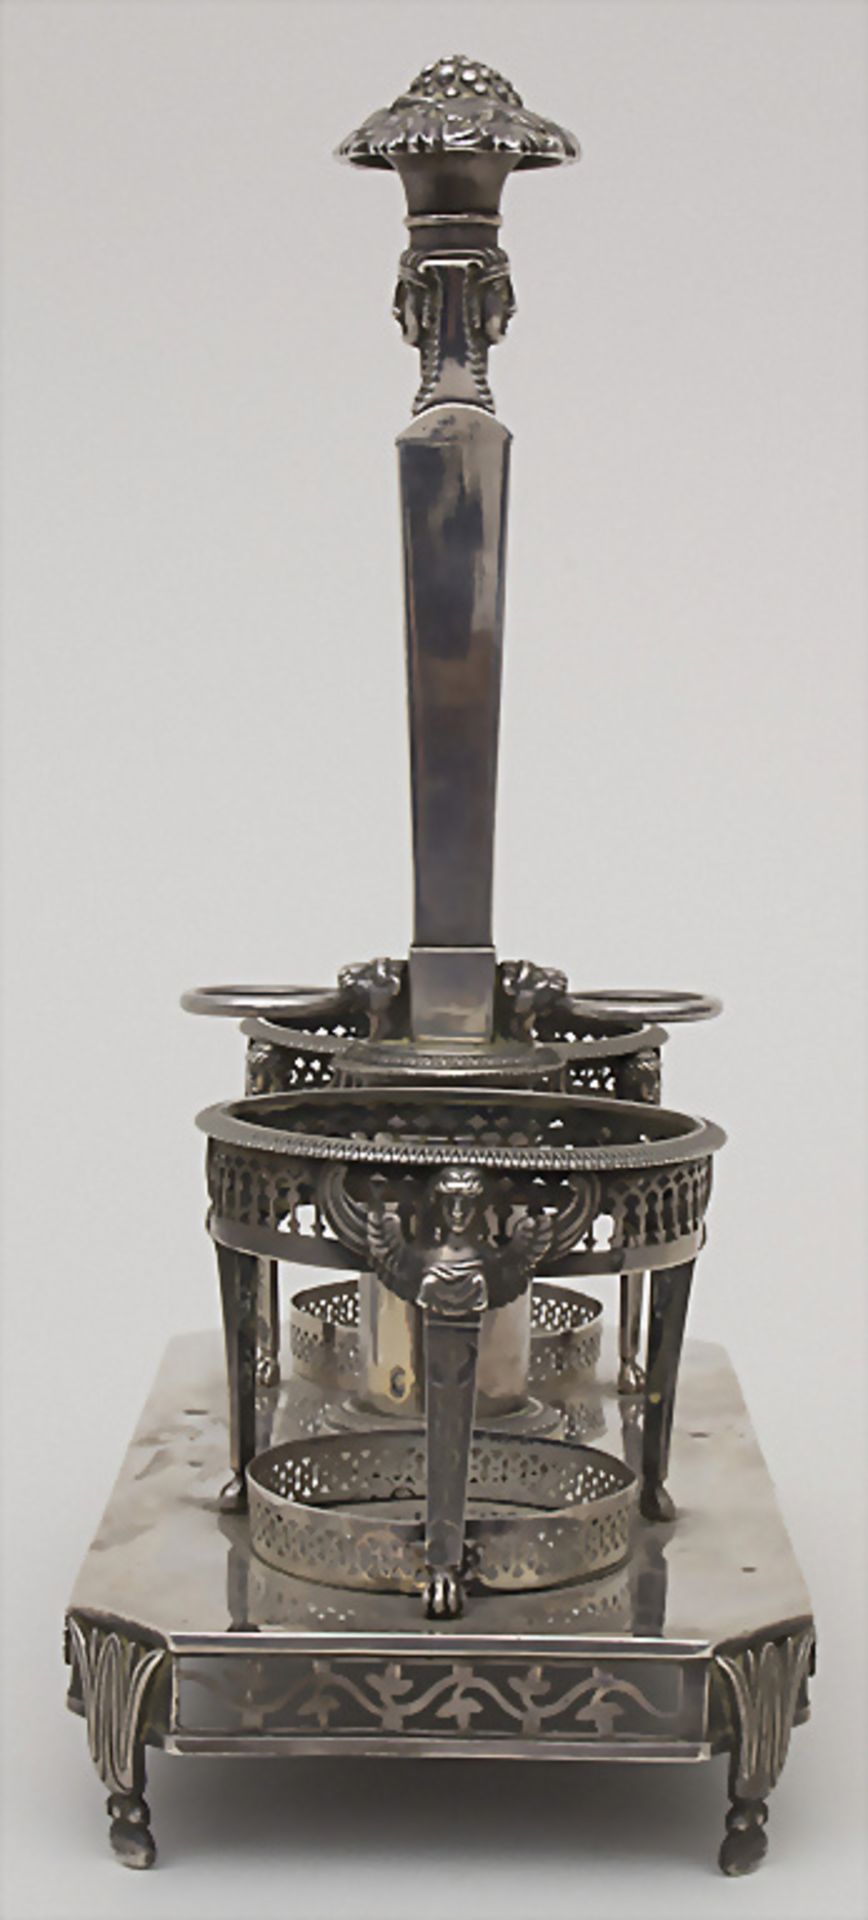 Empire-Huiliere / A silver oil and vinegar cruet set, Paris, 1798-1809 - Image 2 of 8